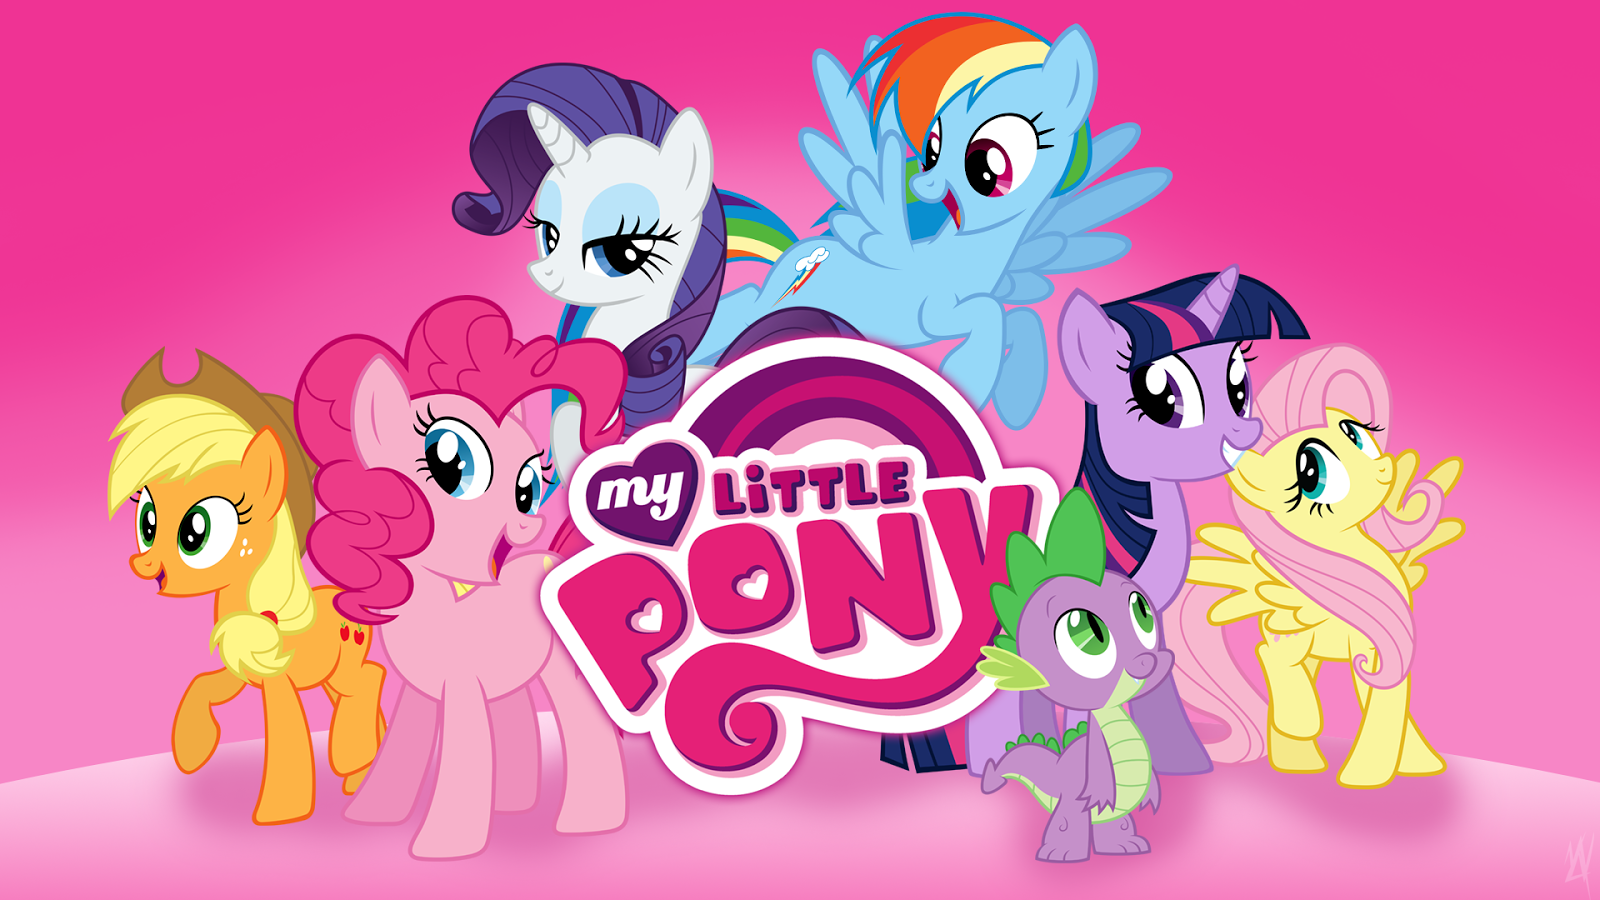 My Little Pony, la magia de la amistad - Página 2 My+little+pony+logo+ponyville+review+blogger